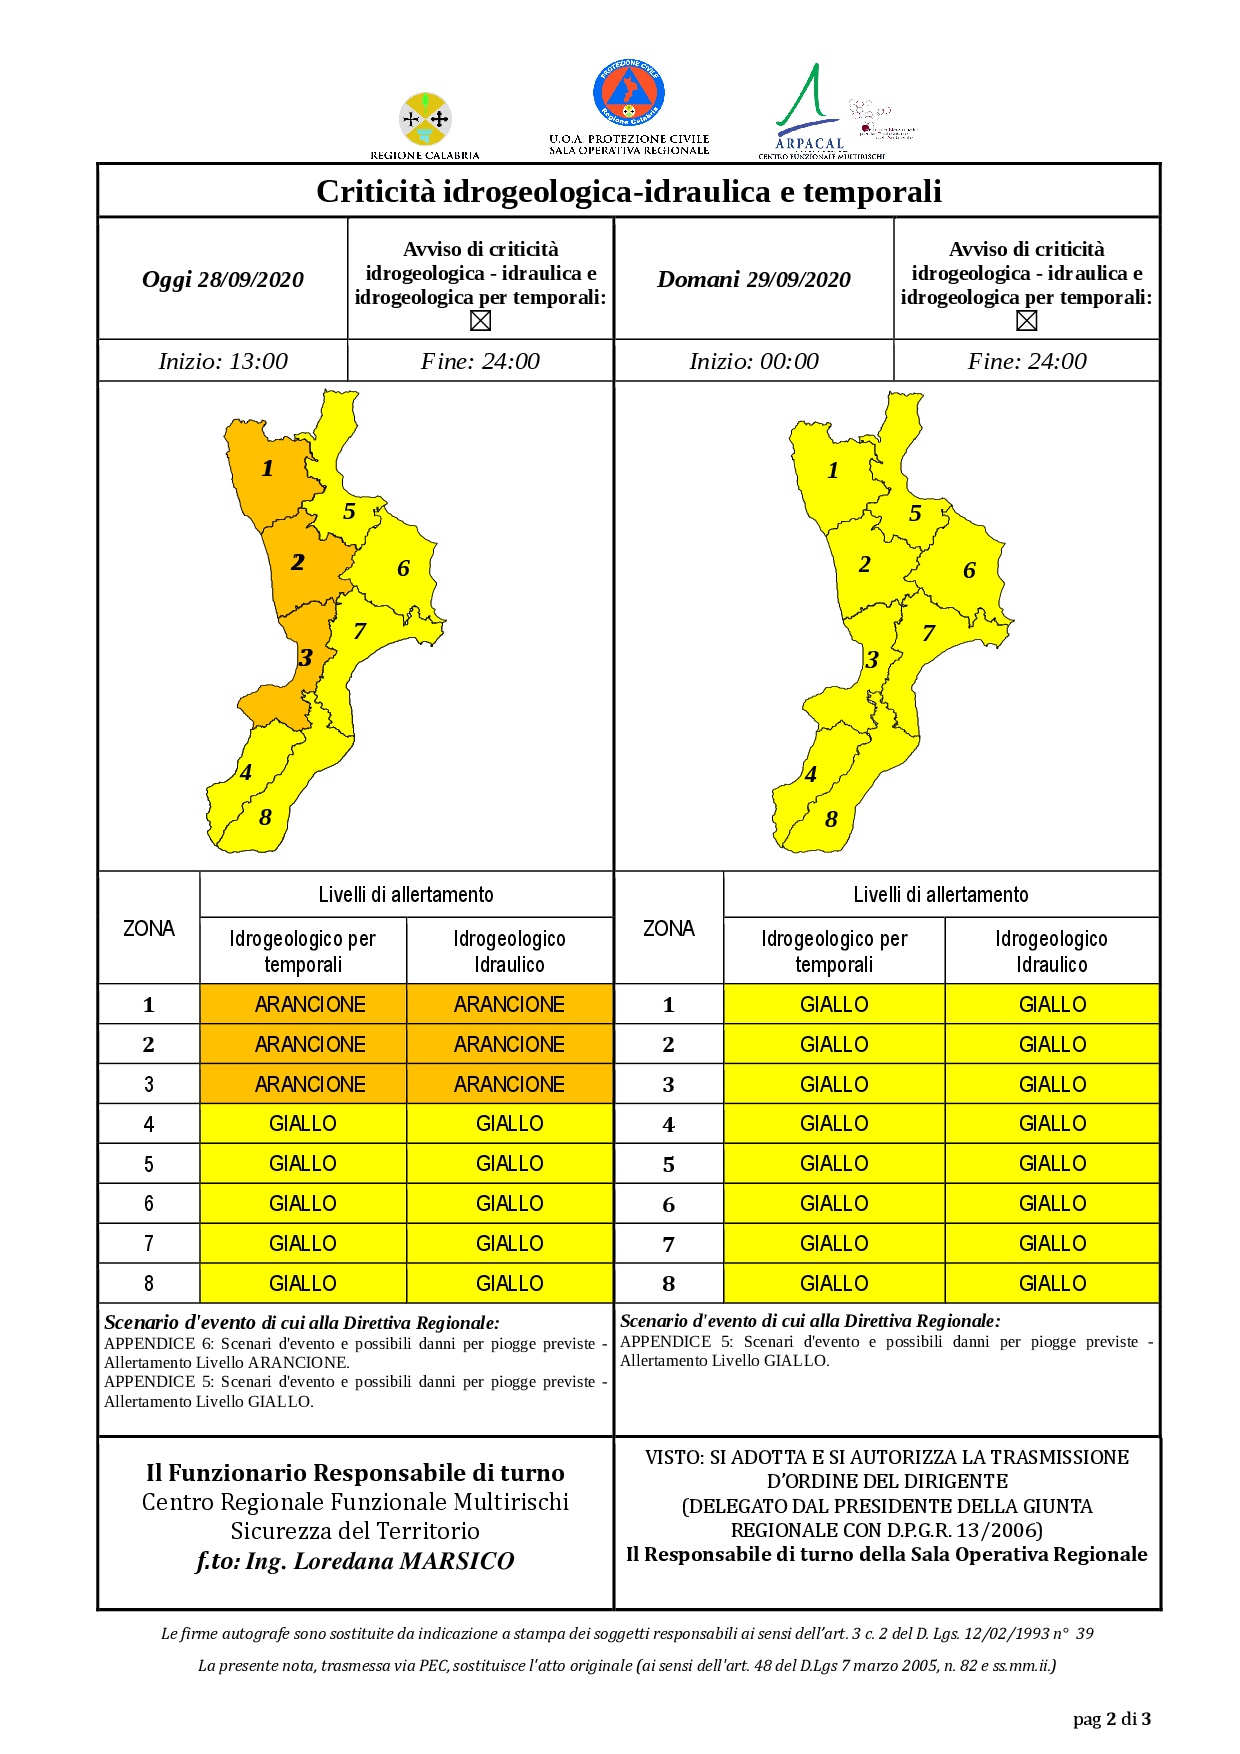 Criticità idrogeologica-idraulica e temporali in Calabria 28-09-2020